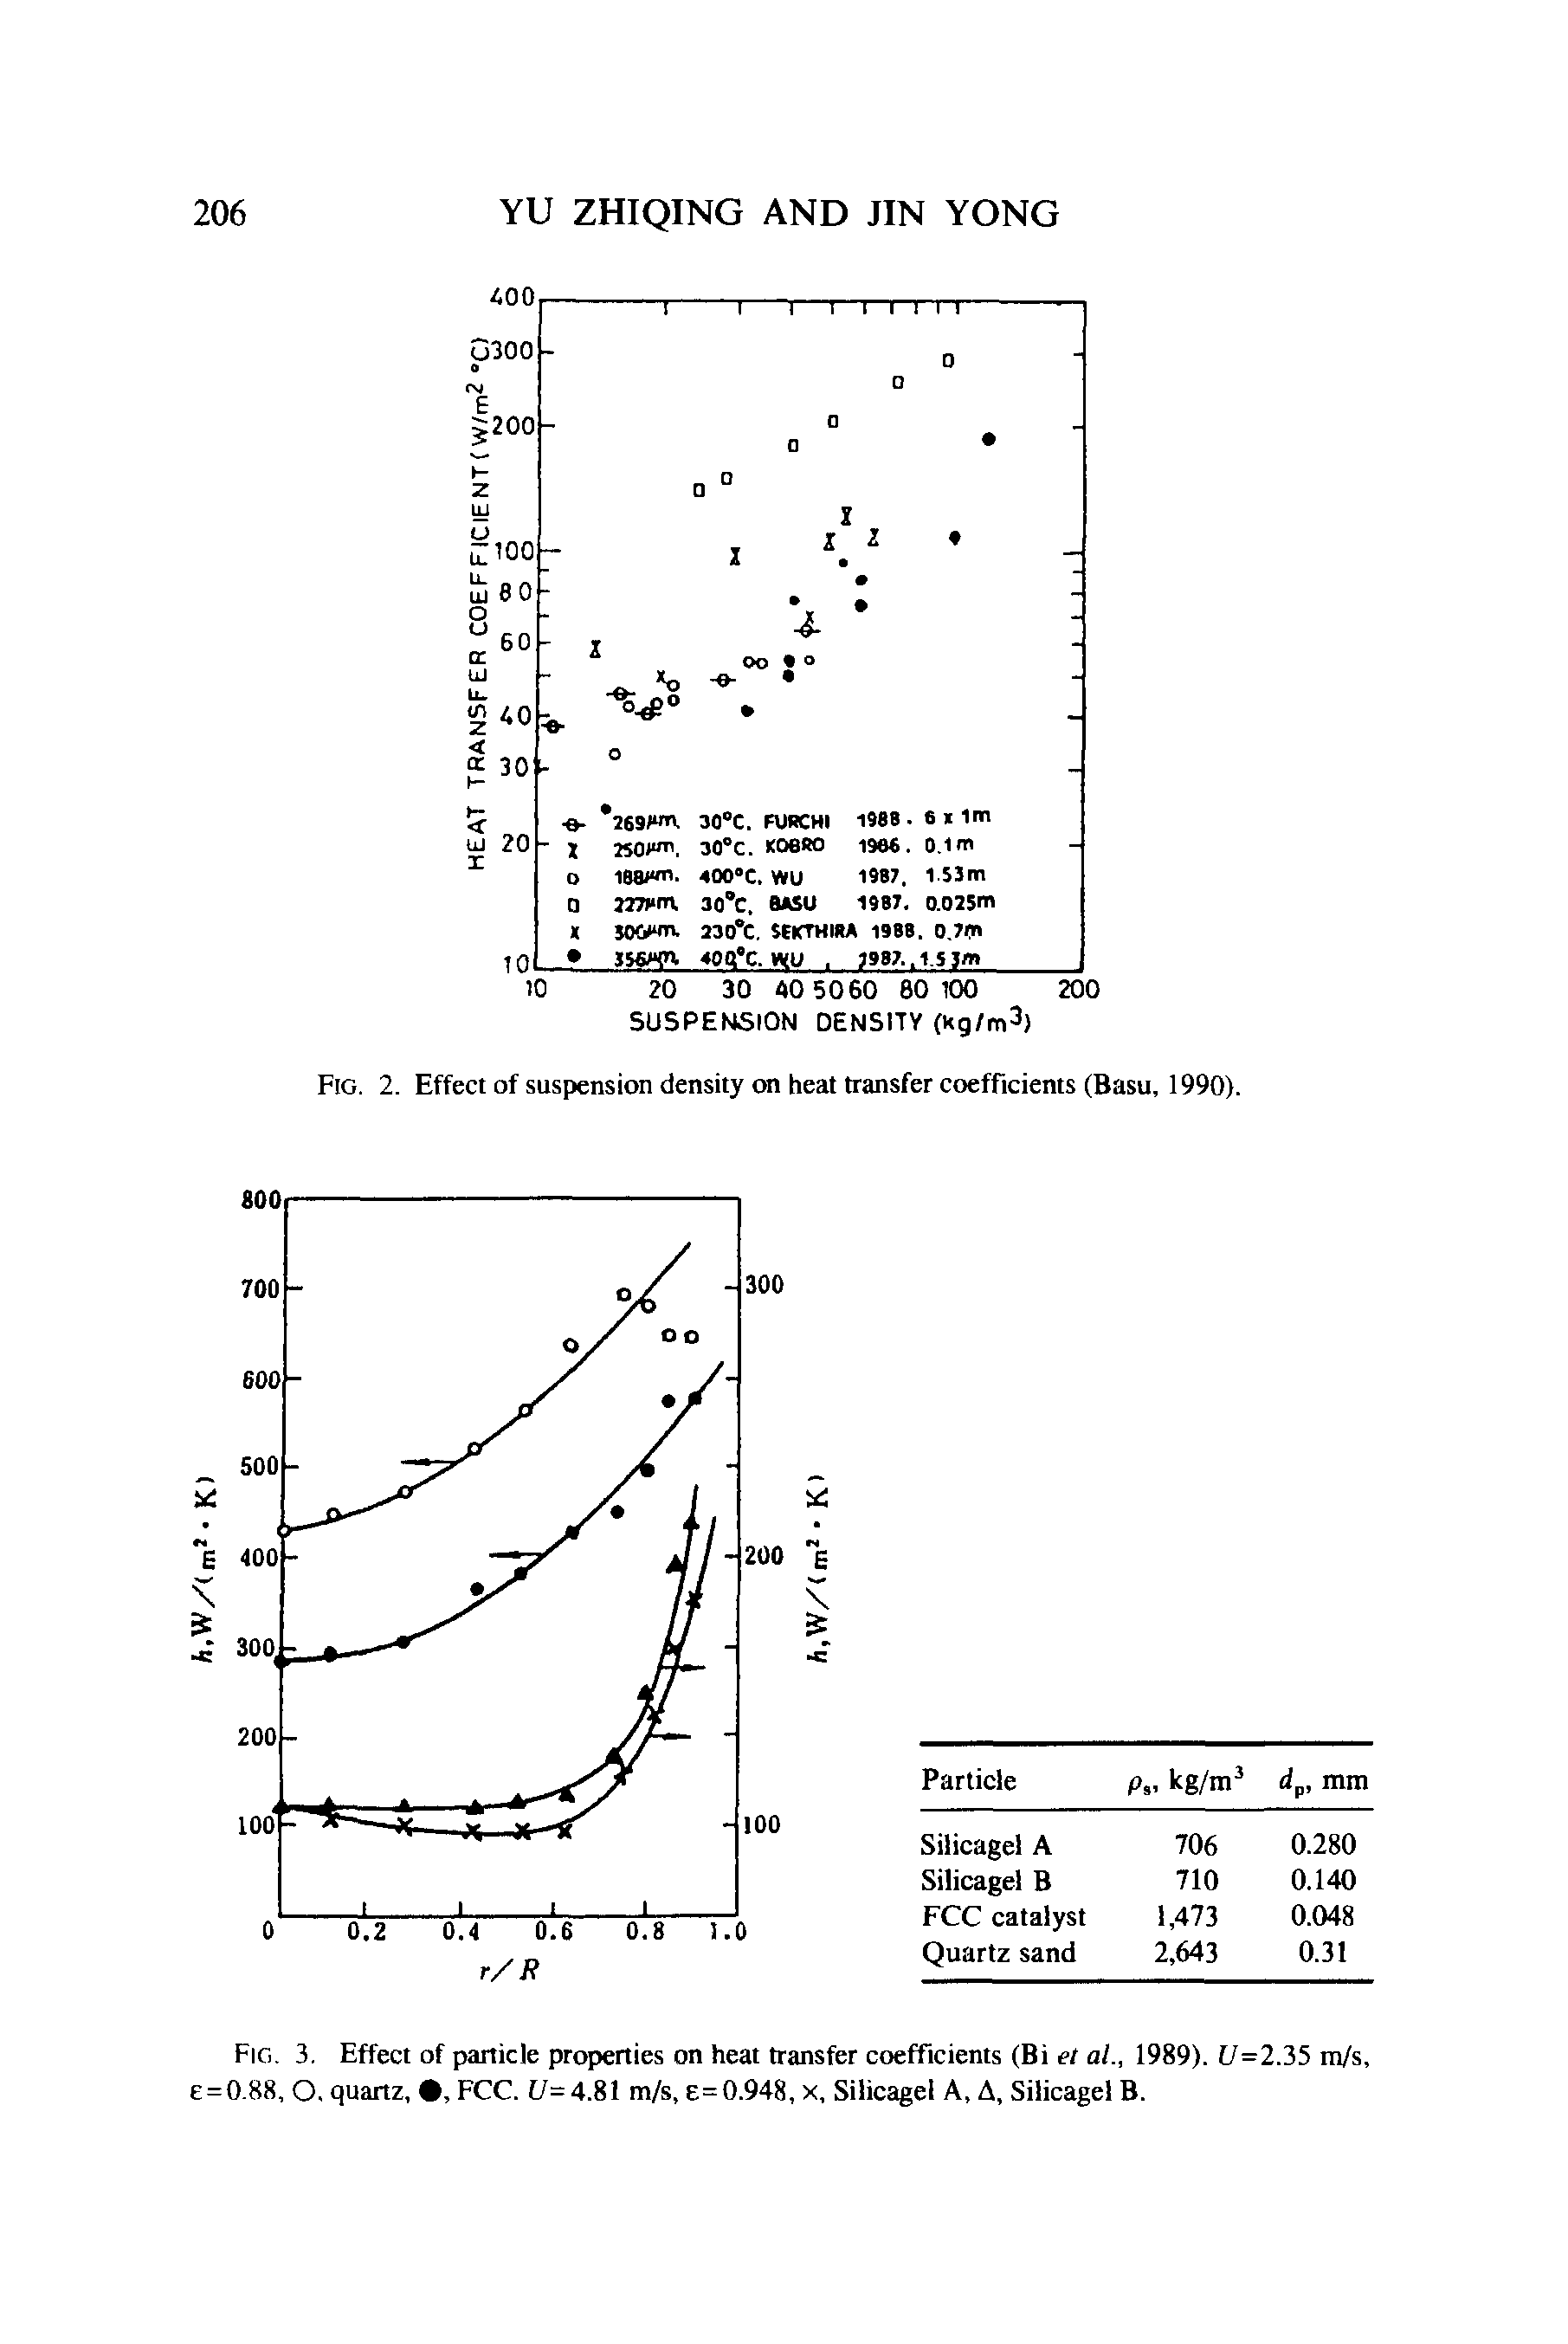 Fig. 2. Effect of suspension density on heat transfer coefficients (Basu, 1990).